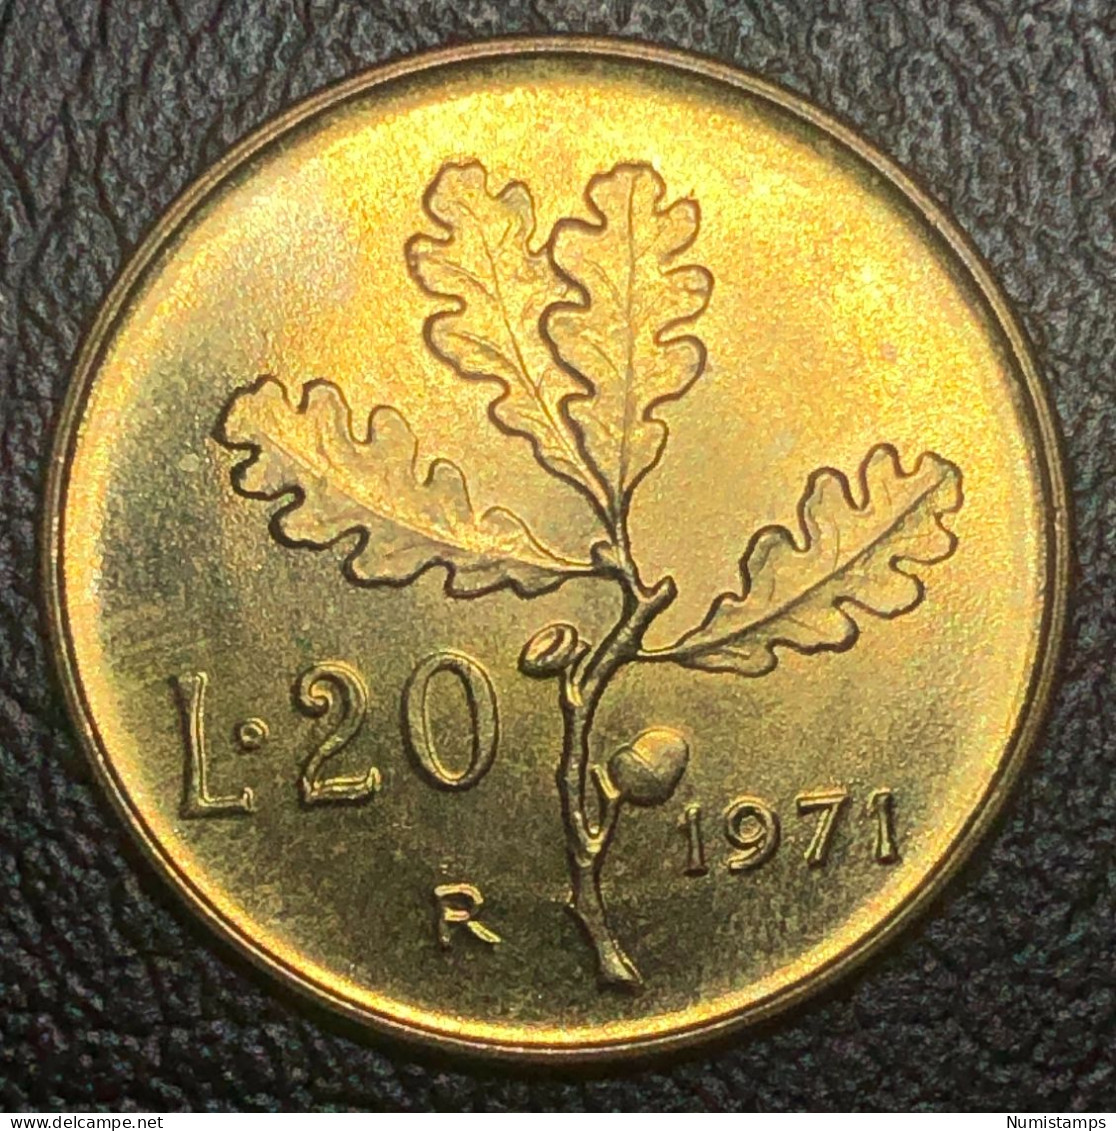 Italia 20 Lire, 1971 (FDC) - 20 Lire